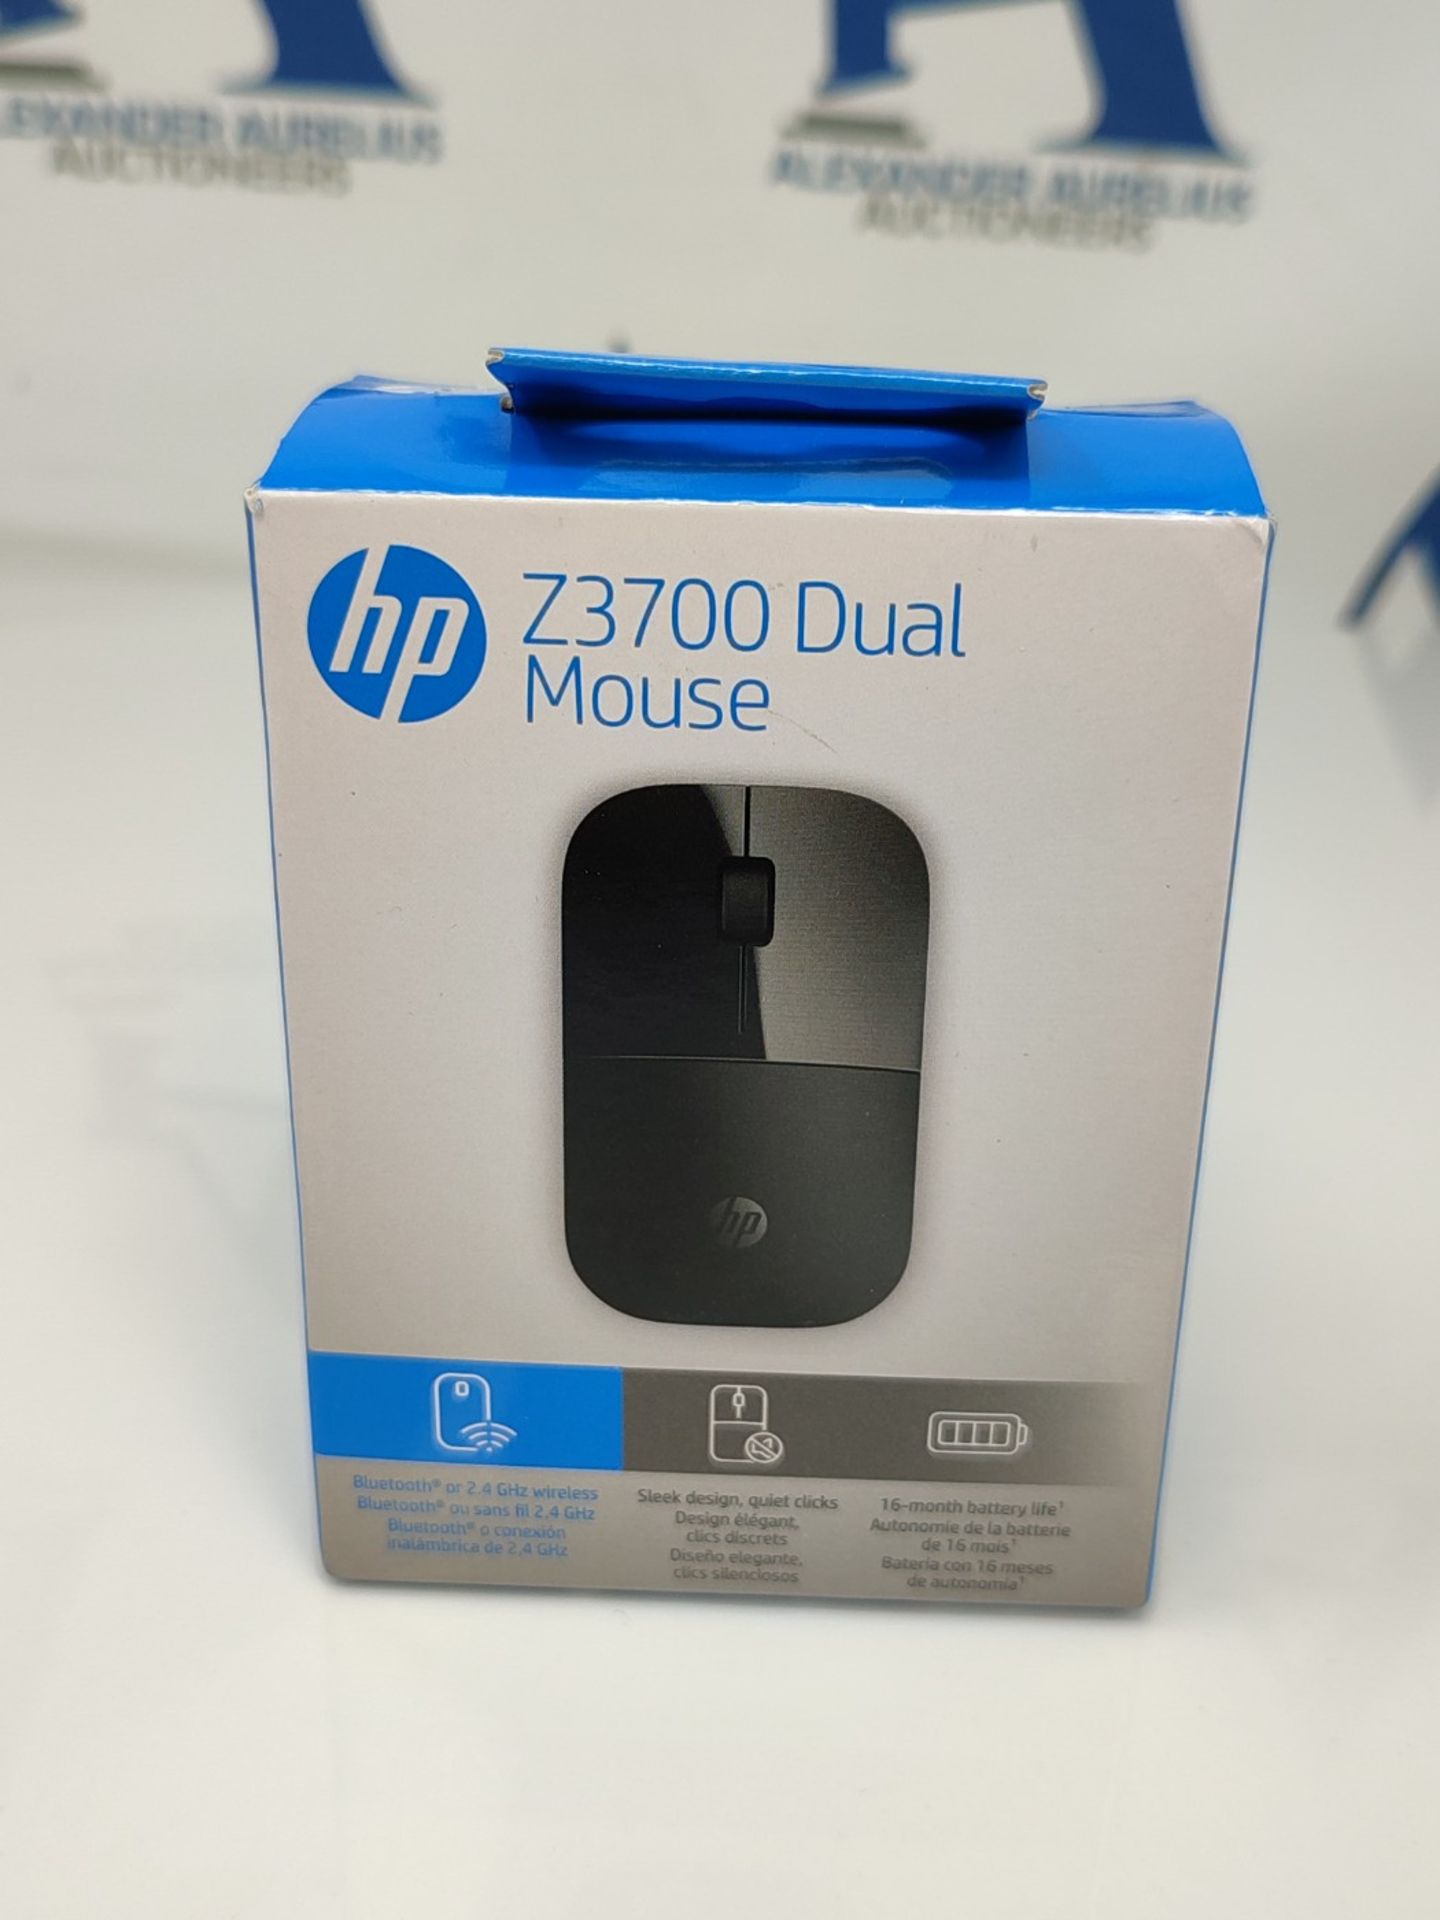 HP Z3700 wireless mouse | 1200 optical sensors | up to 16 months battery life | 2.4 GH - Bild 2 aus 3